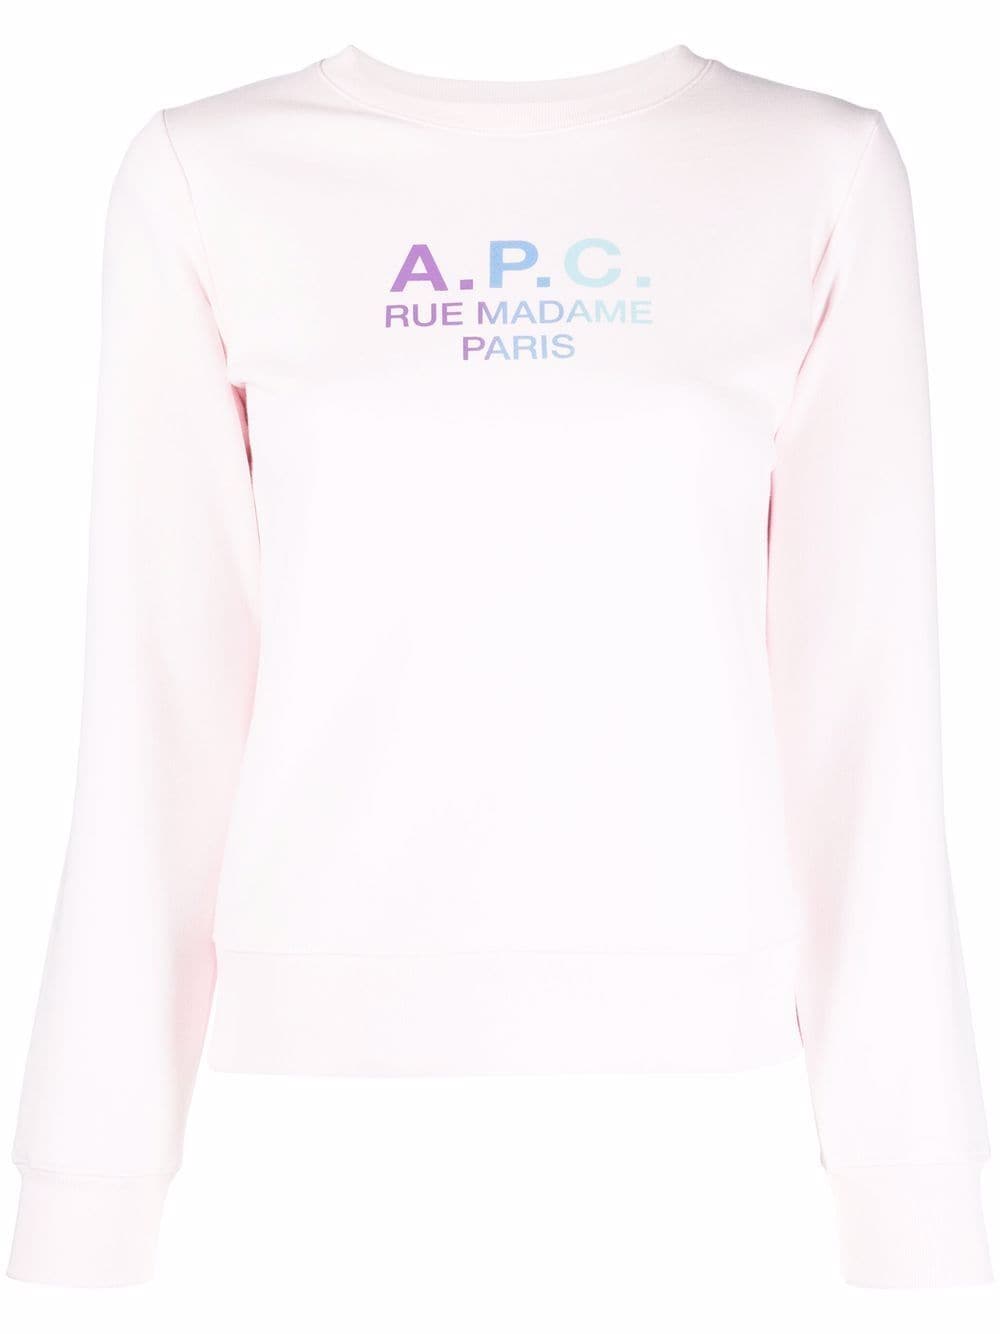 A.P.C. Rue Madame Paris Sweatshirt - Rosa von A.P.C.